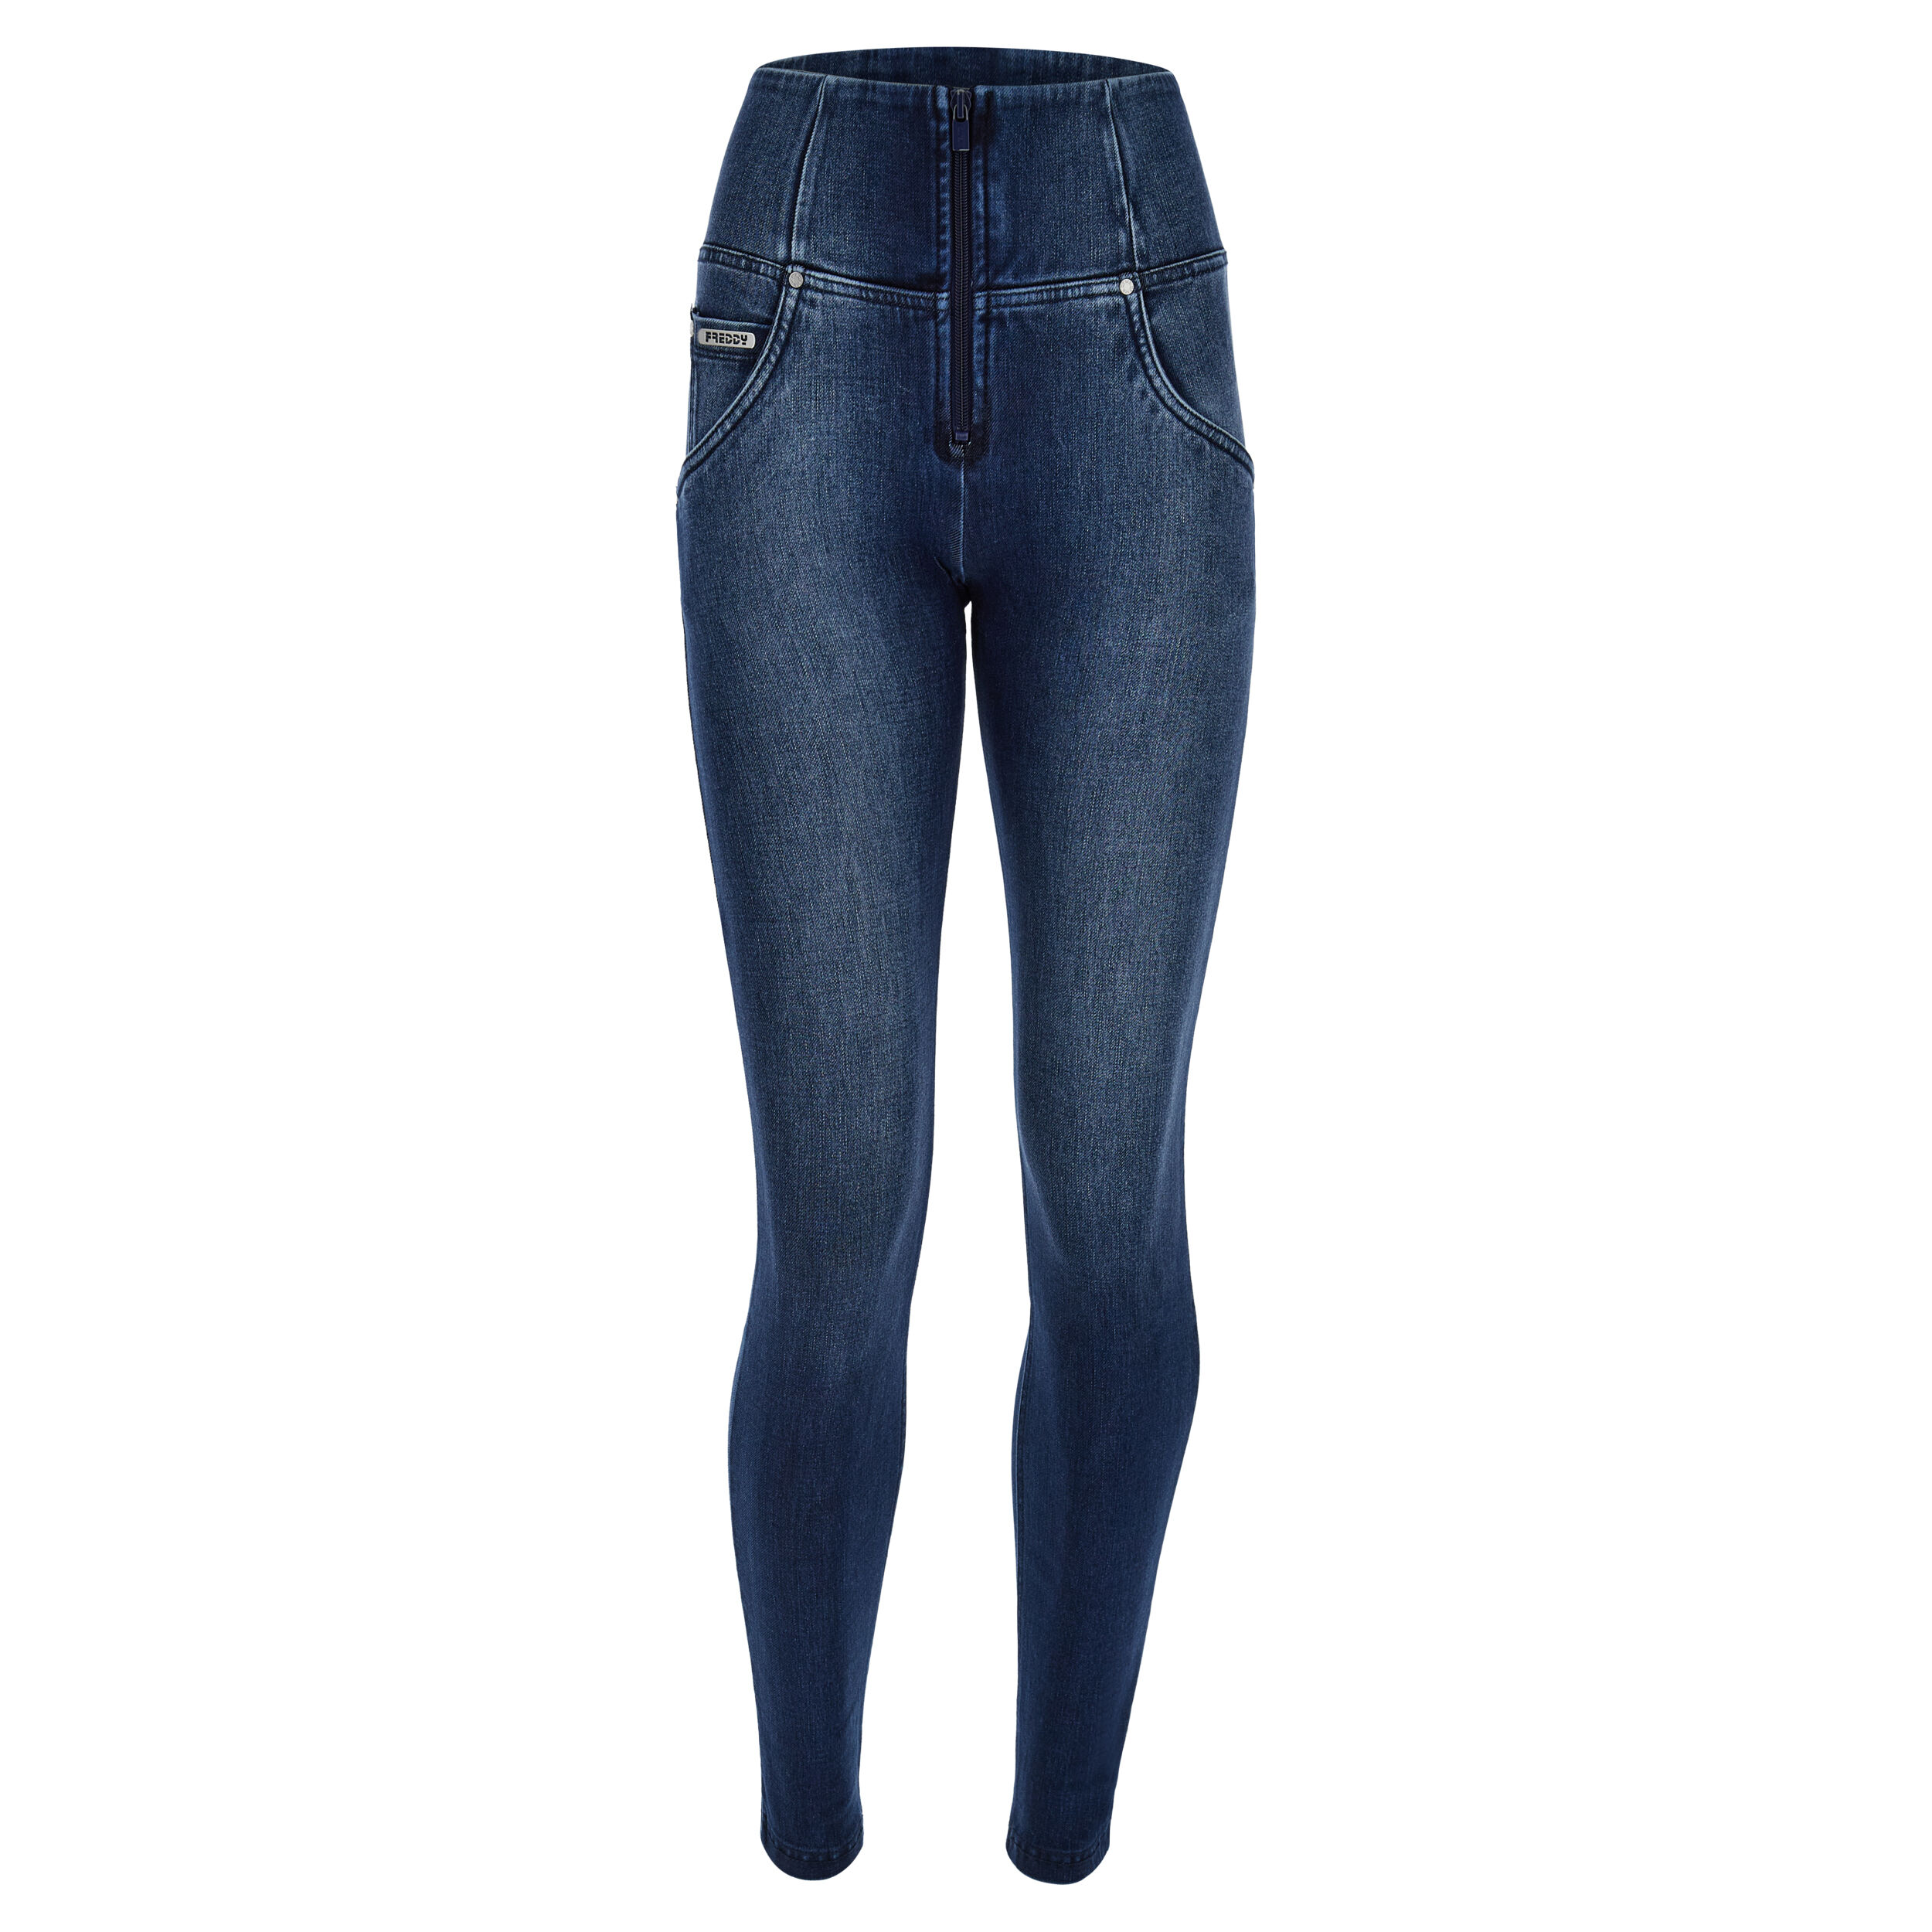 freddy jeans push up wr.up® vita alta superskinny denim navetta ecologico dark jeans-seams on tone donna large